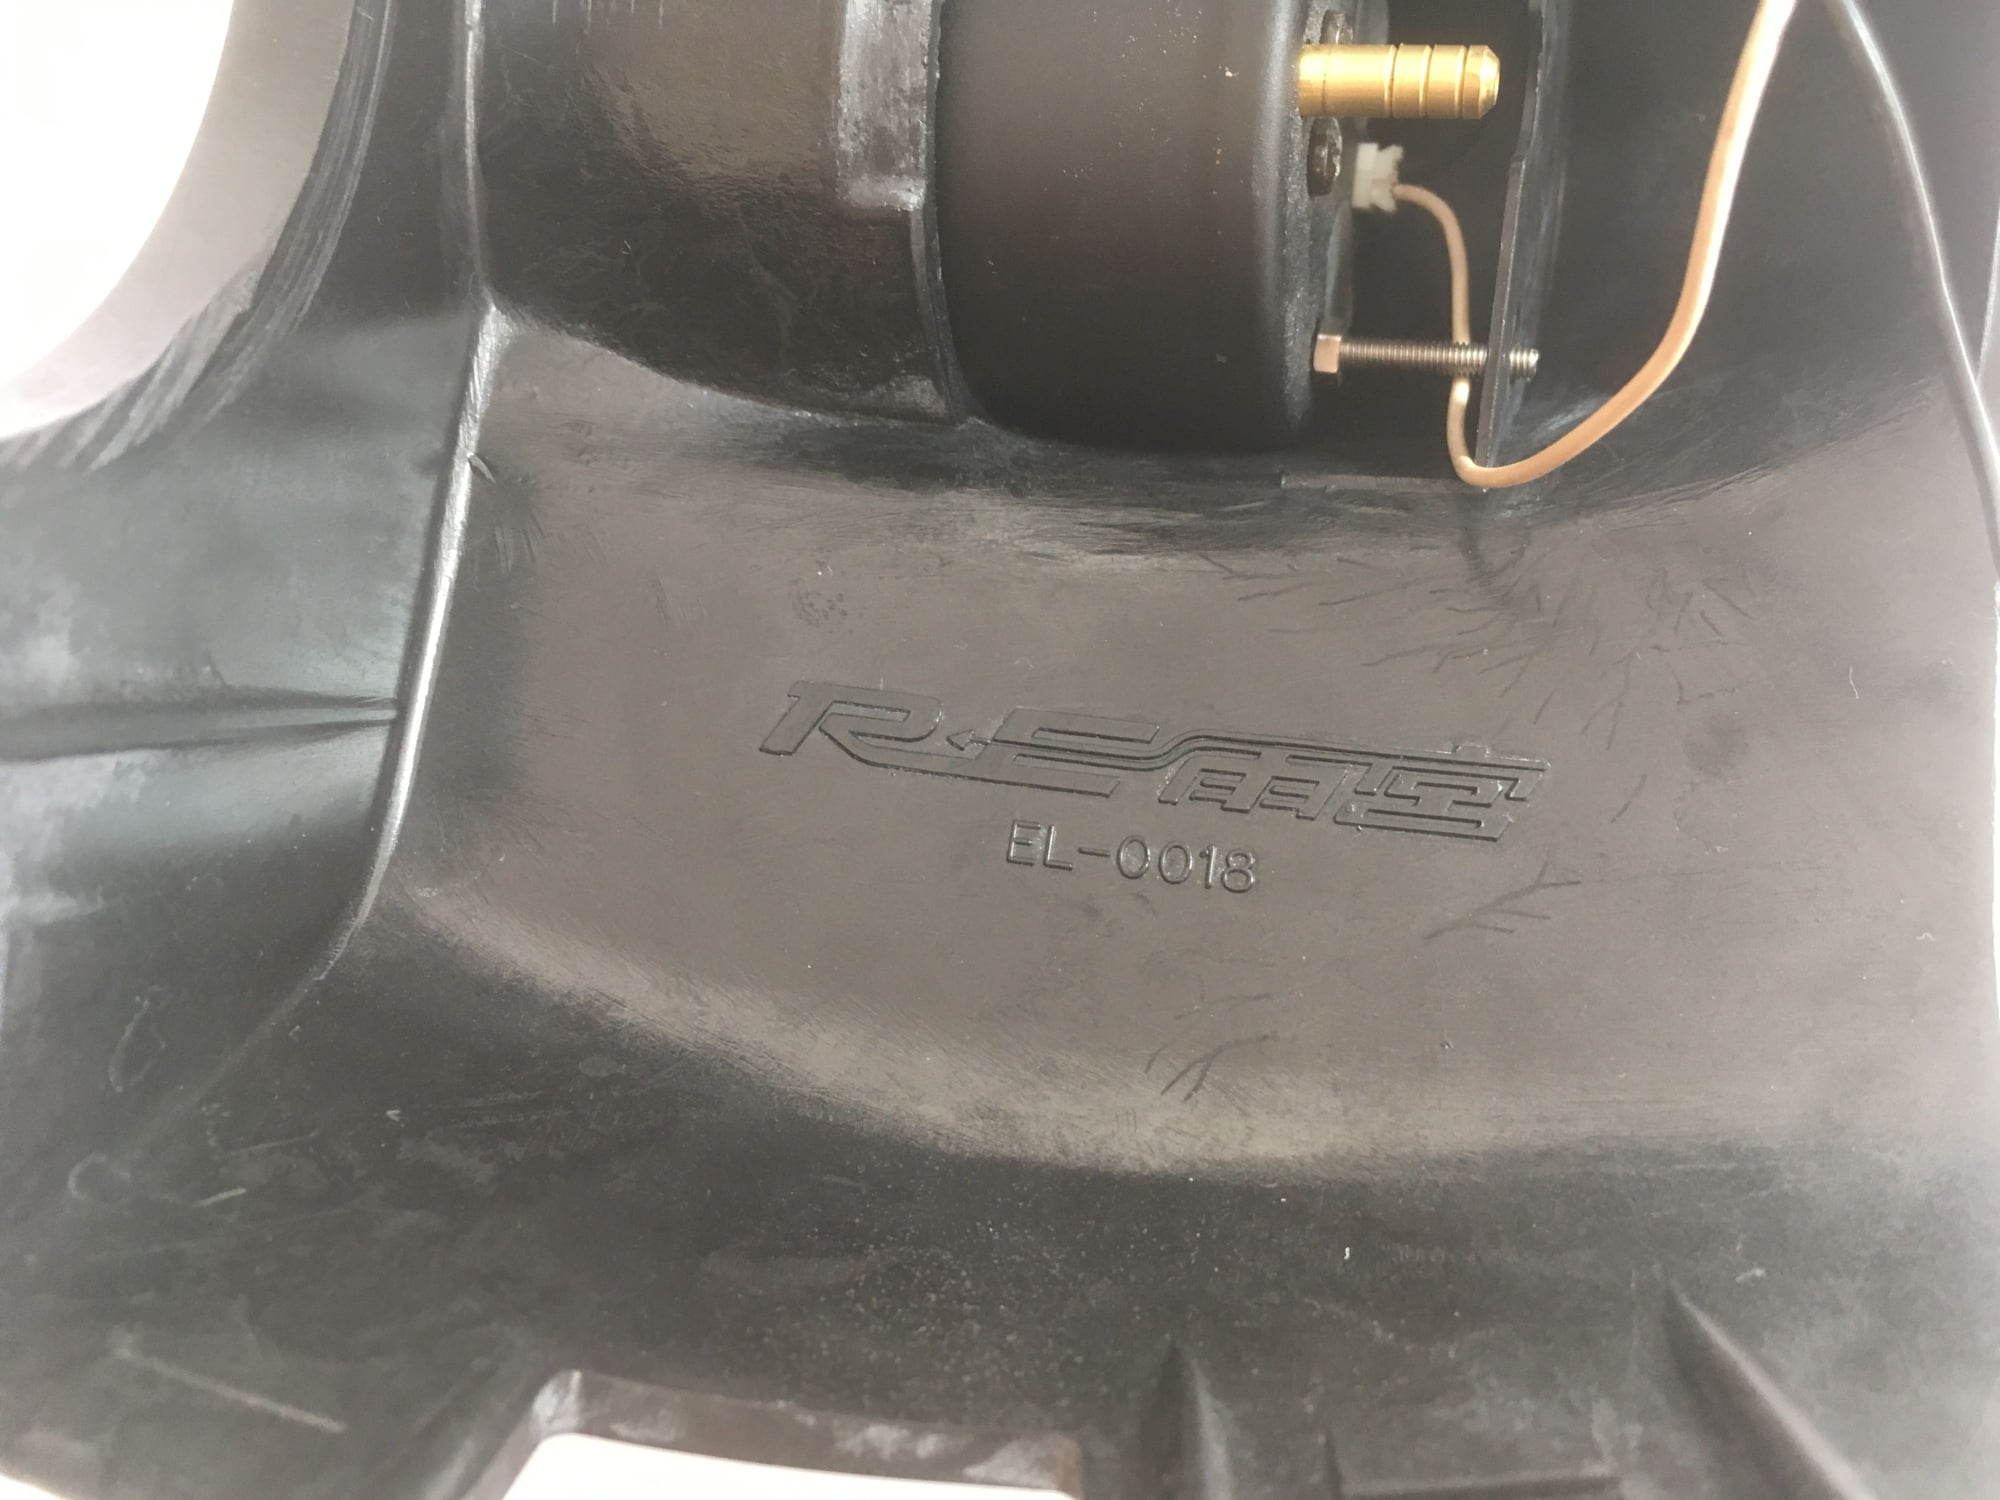 Interior/Upholstery - RE-Amemiya steering column gauge holder with RE-A boost Gauge - Used - 1993 to 2002 Mazda RX-7 - Split, Croatia